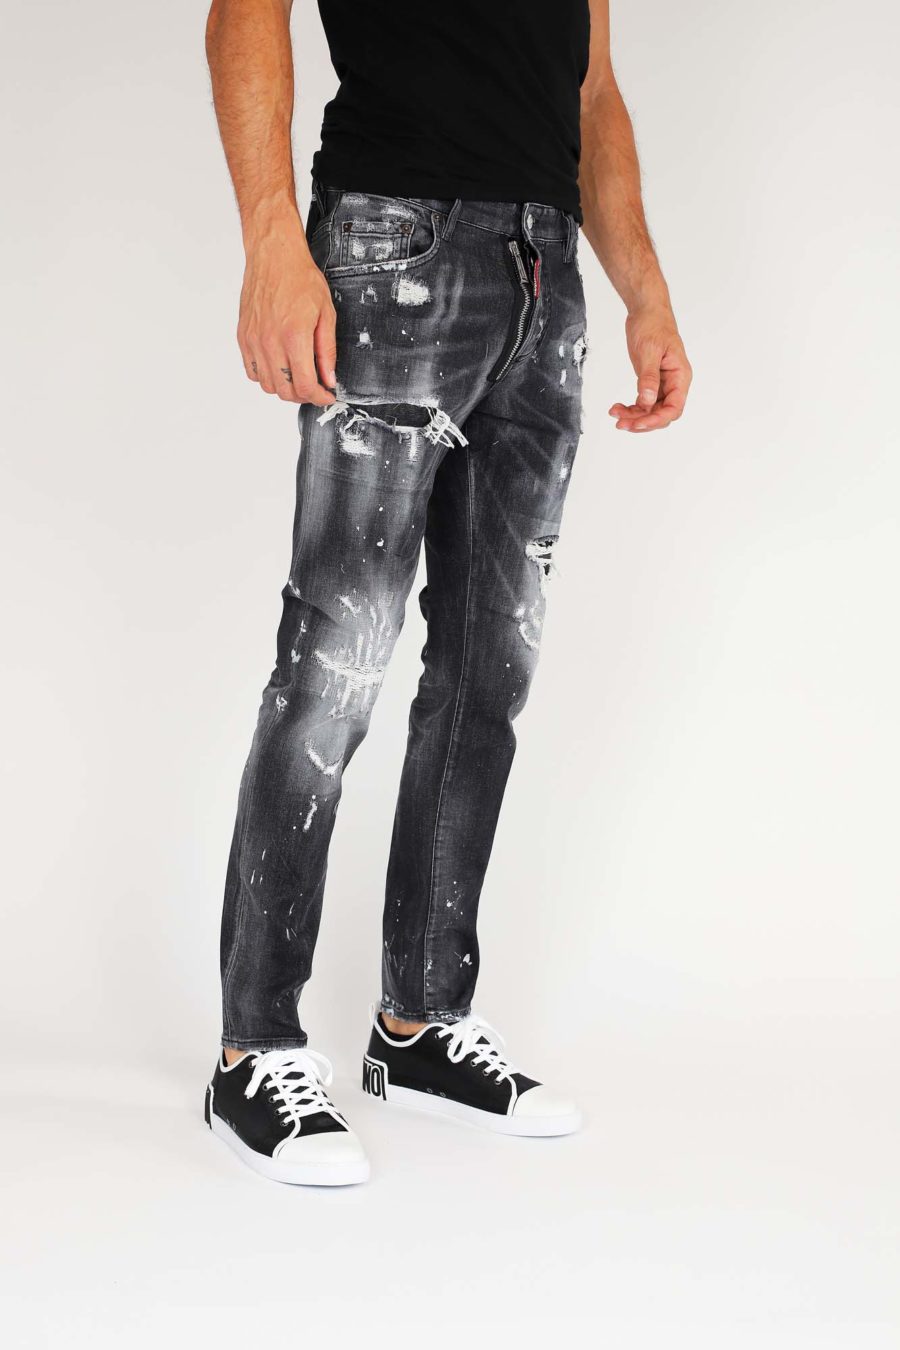 Pantalon skater en jean noir milano avec fermeture éclair - IMG 9845